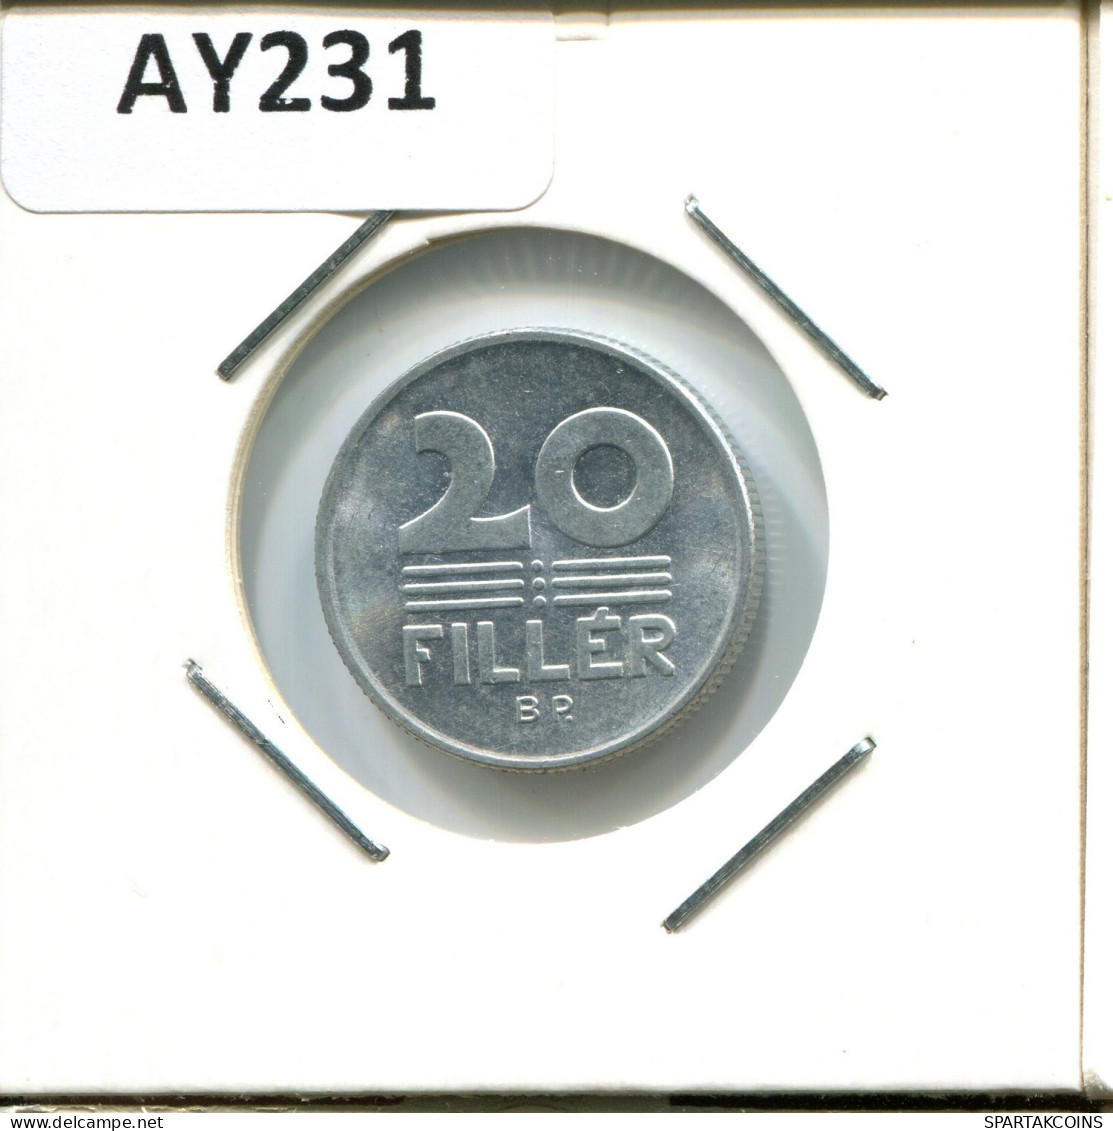 20 FILLER 1991 HUNGARY Coin #AY231.2.U.A - Hungría